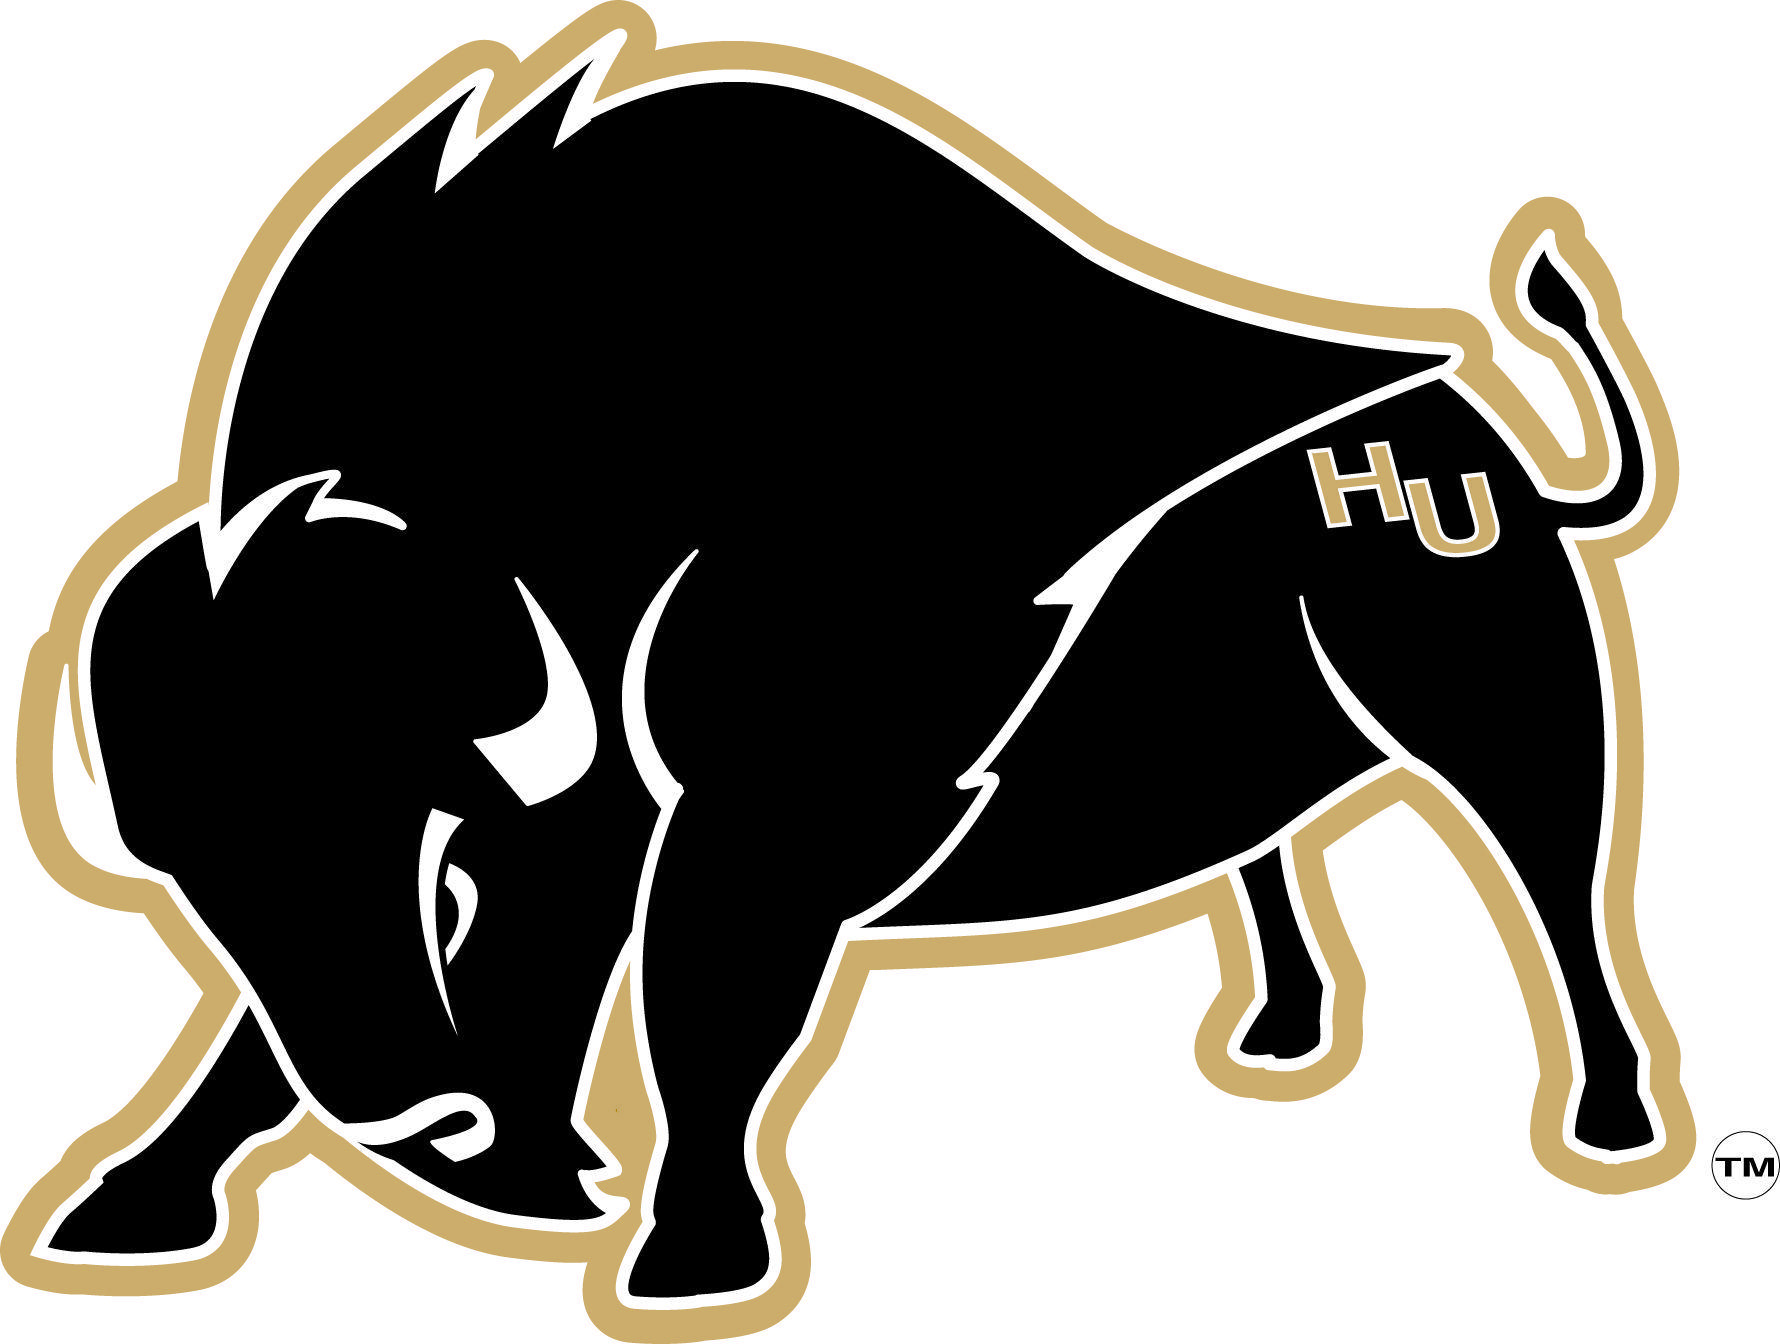 Harding Bison Logo - Harding University- Bison. College mascots and logos